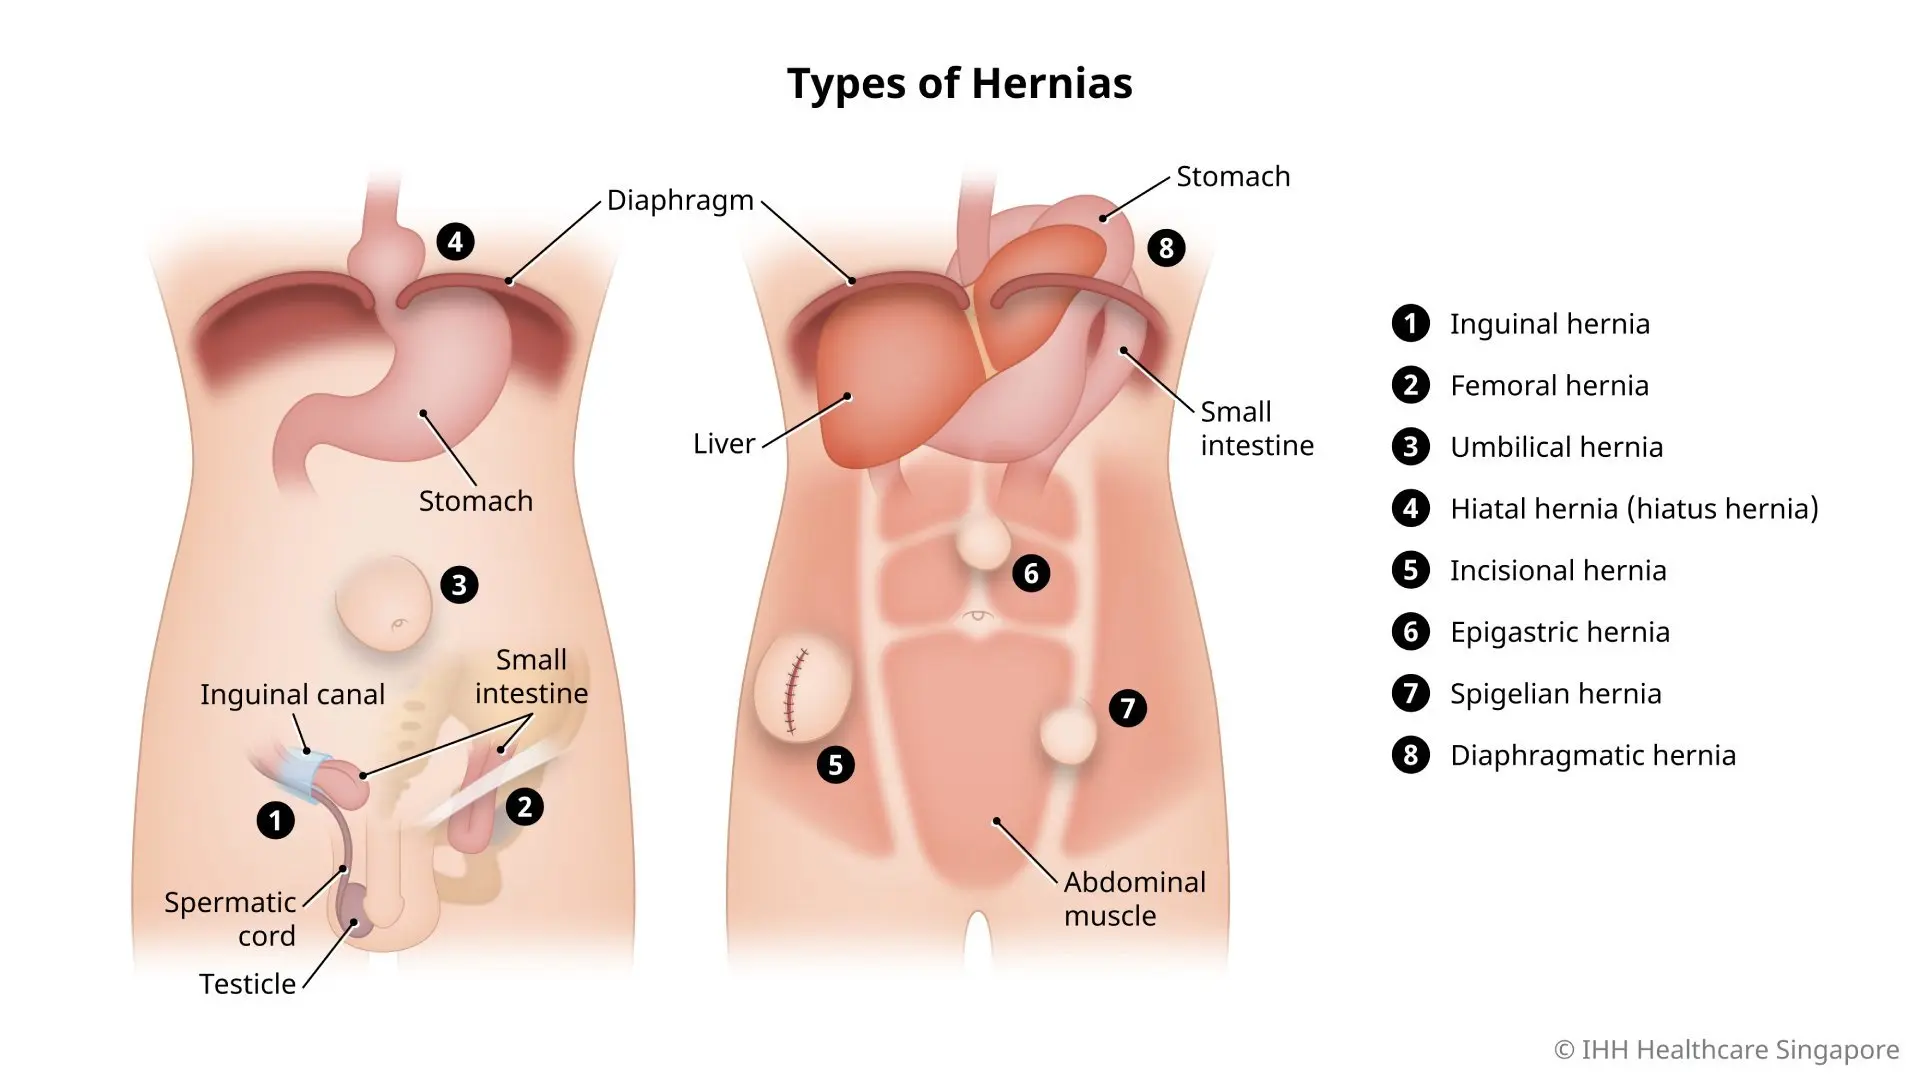 Illustration of types of hernias, like inguinal, femoral, umbilical, hiatal, incisional, epigastric, Spigelian, diaphragmatic